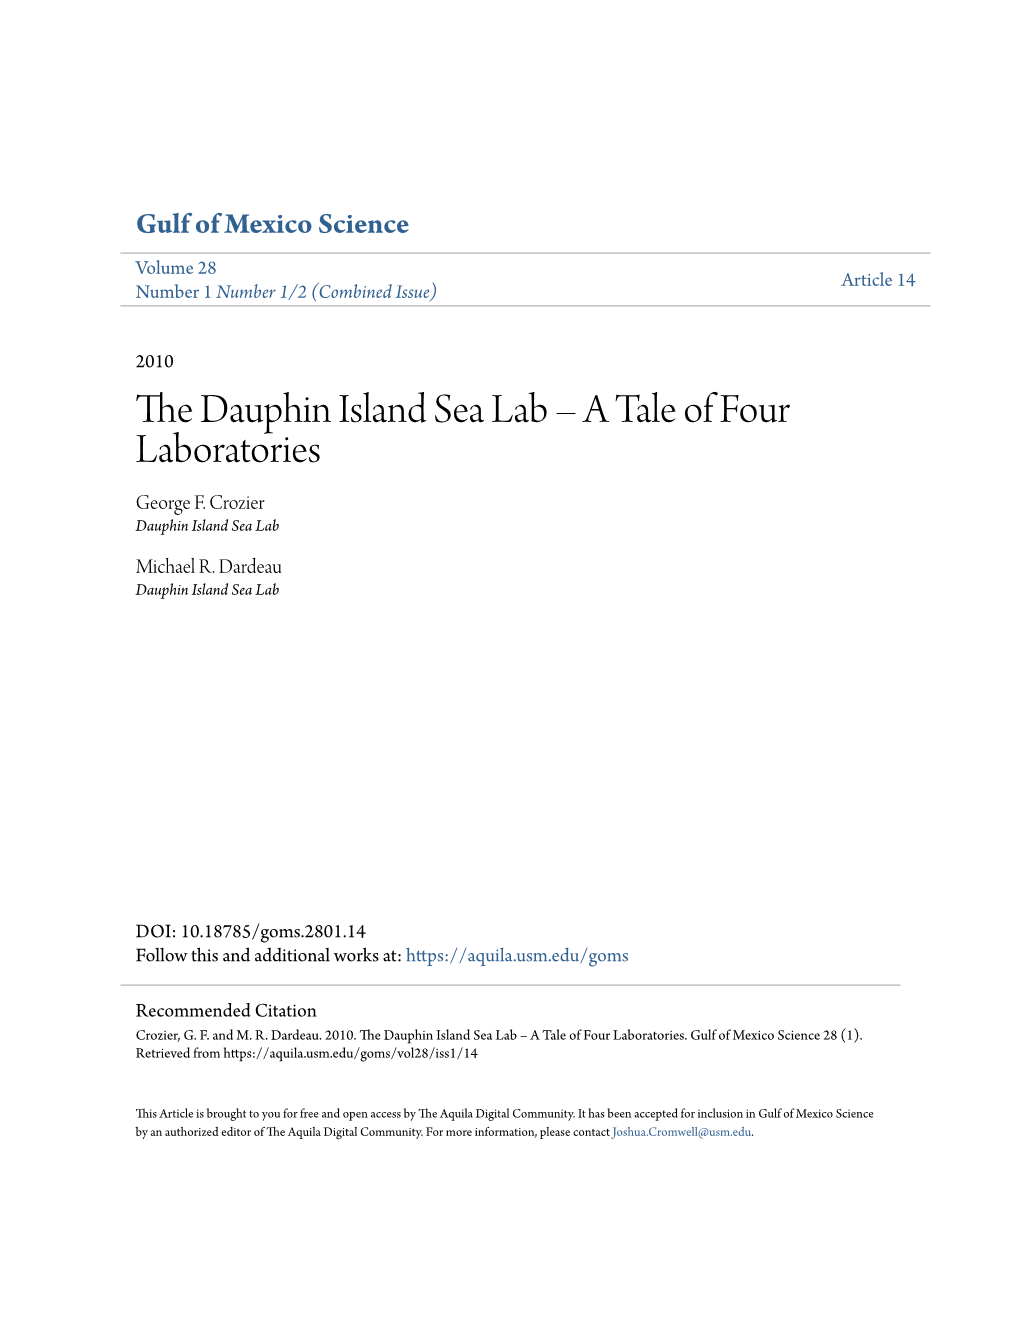 The Dauphin Island Sea Lab Â•Fi a Tale of Four Laboratories